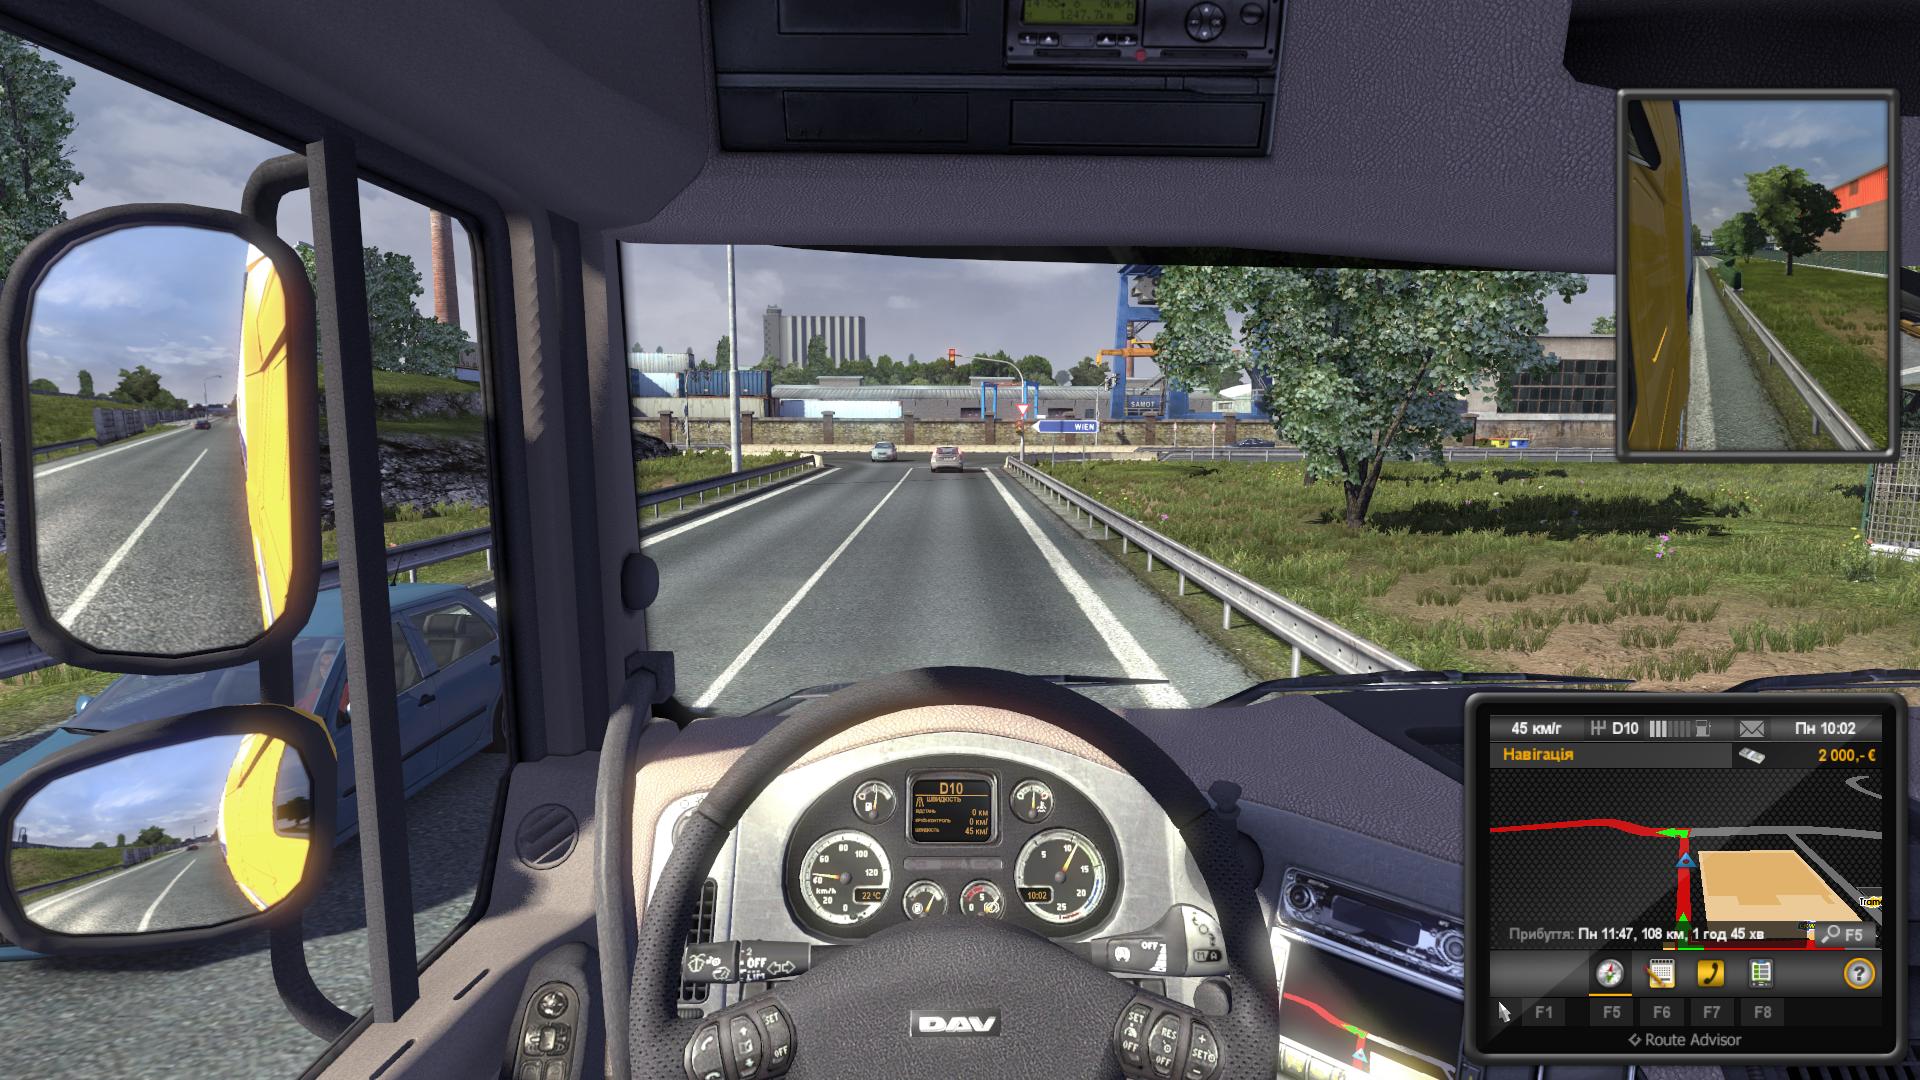 Truck simulator pro 3. Евро трак симулятор 2. Евро трак симулятор 1. Евро трак симулятор дальнобойщики. Euro Truck Simulator 2 дальнобойщики 2.